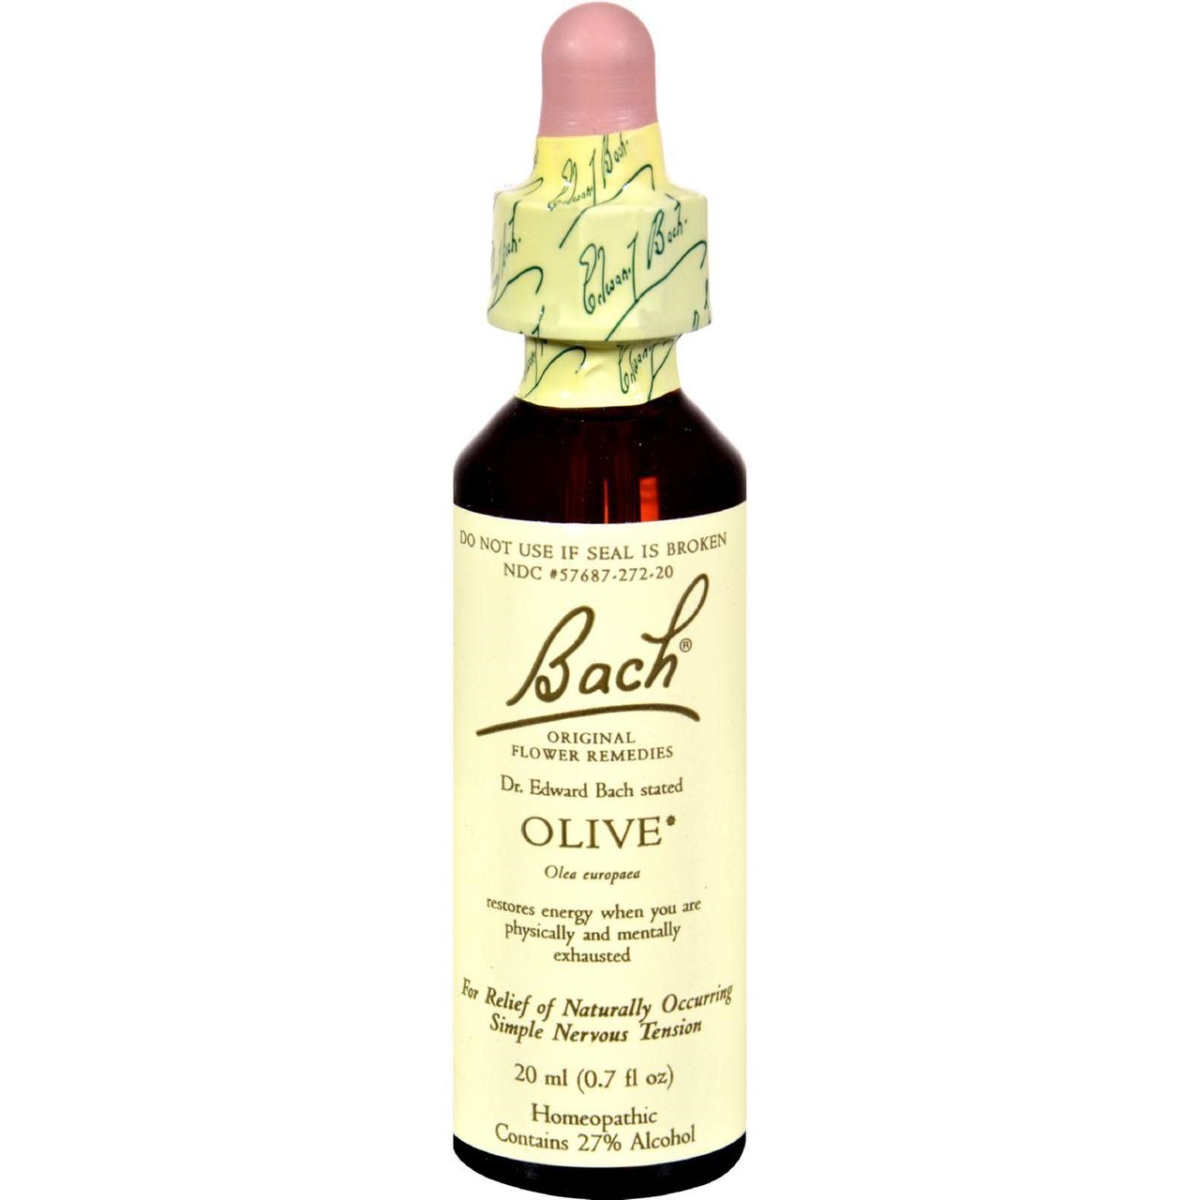 Hg0233833 0.7 Fl Oz Flower Remedies Essence, Olive